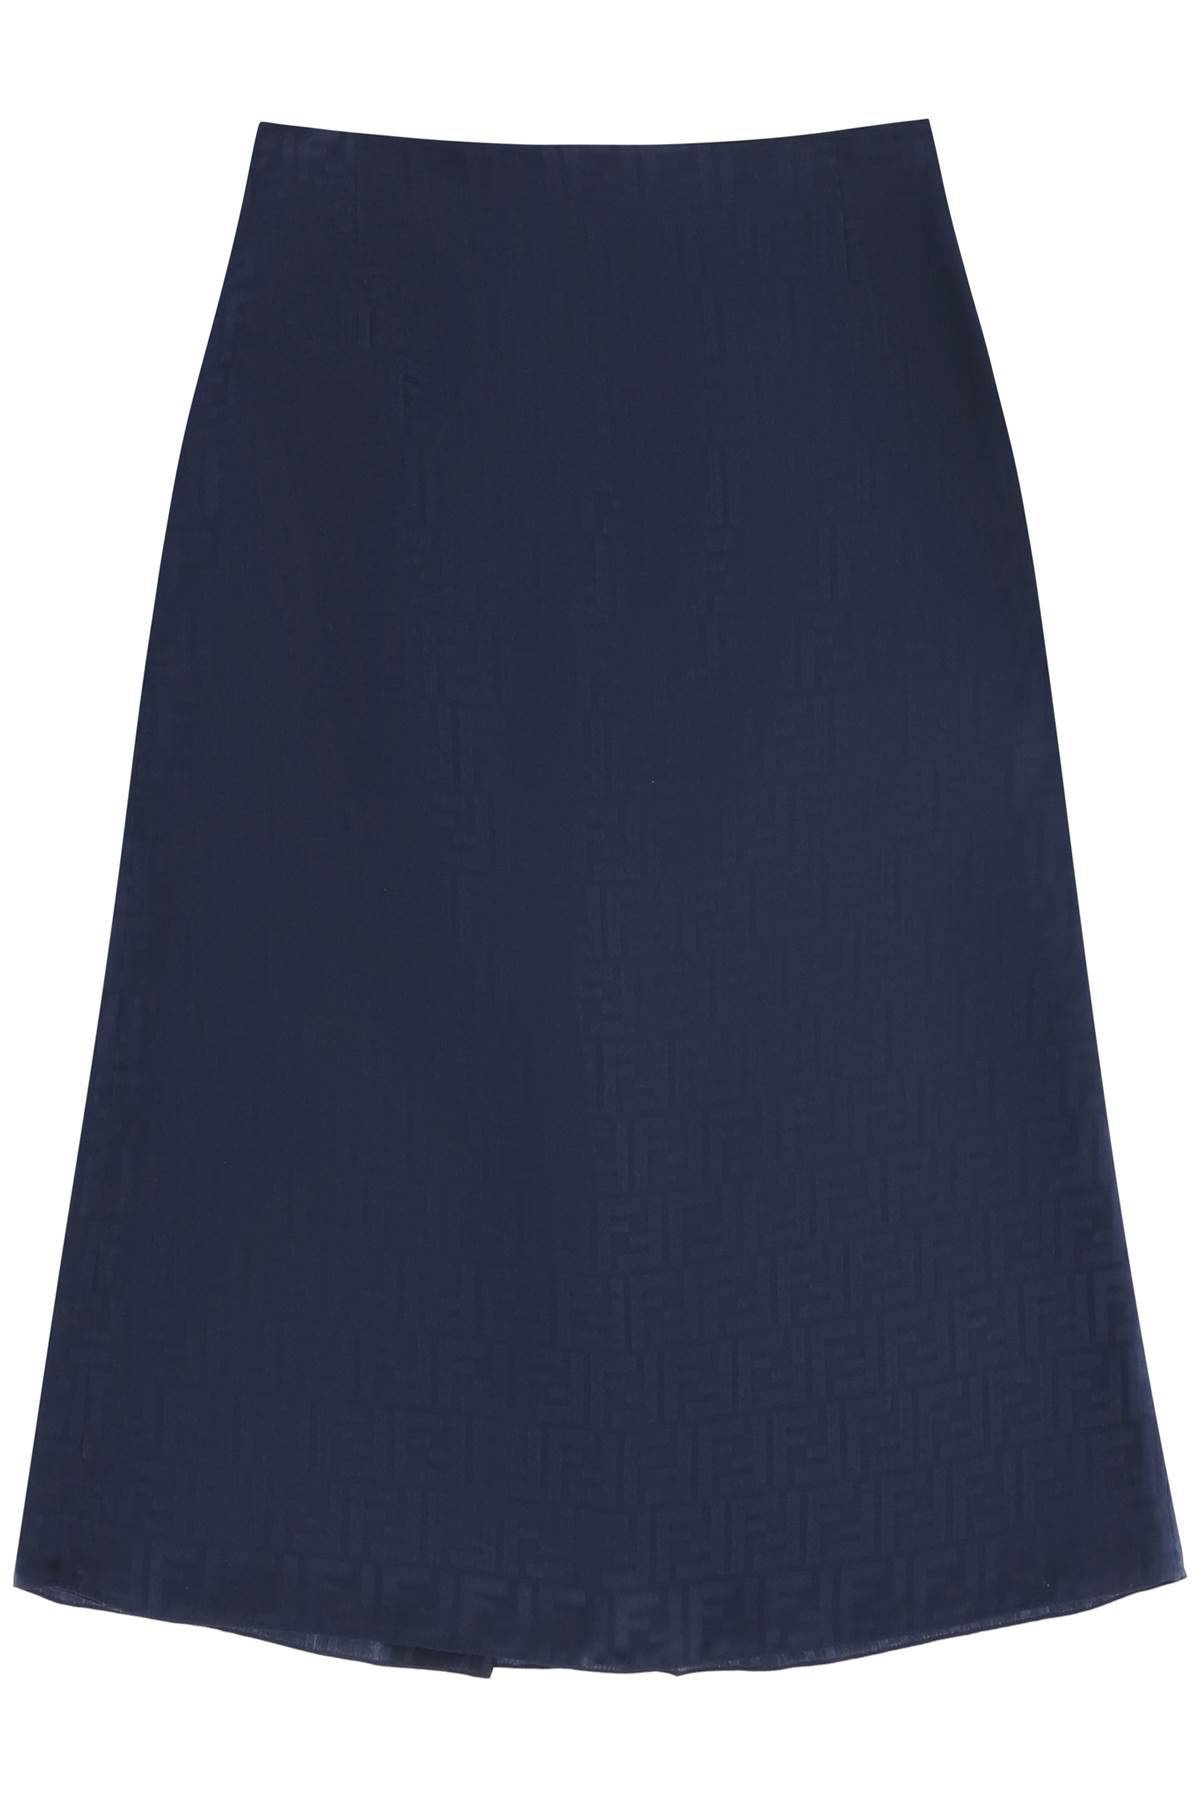 Fendi Ff Jacquard Satin Pencil Skirt In Blue